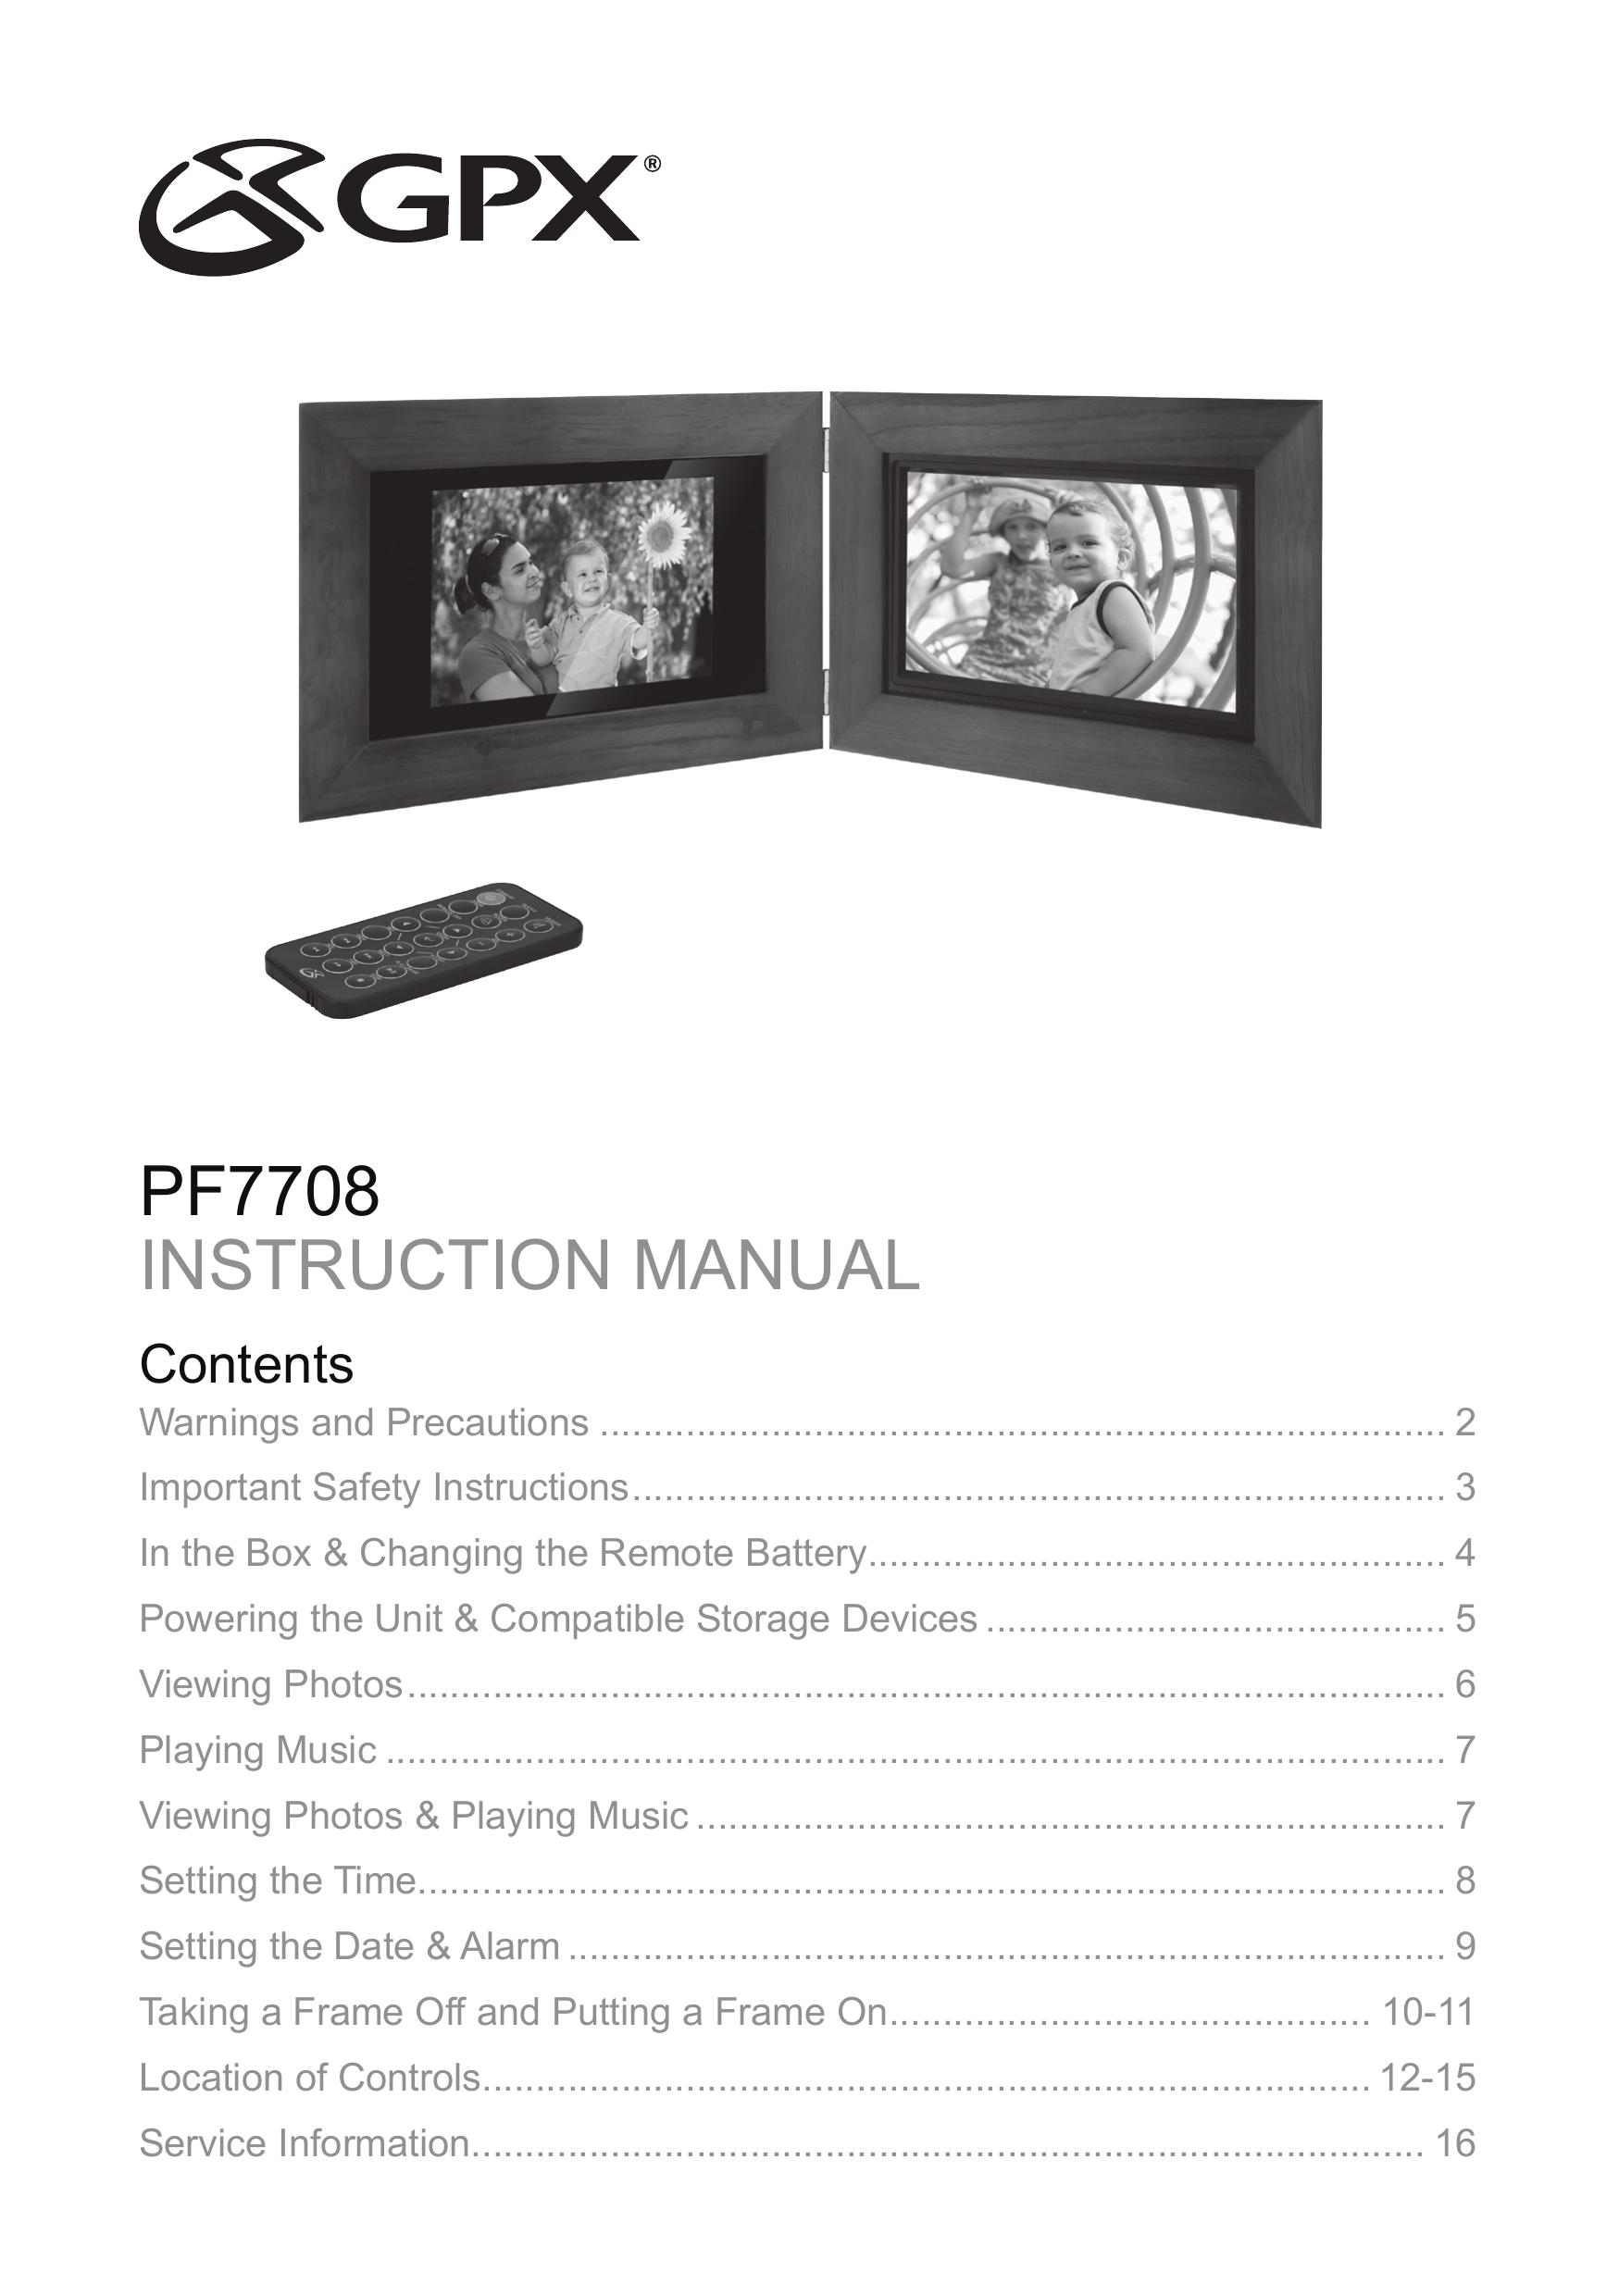 GPX PF7708 Digital Photo Frame User Manual